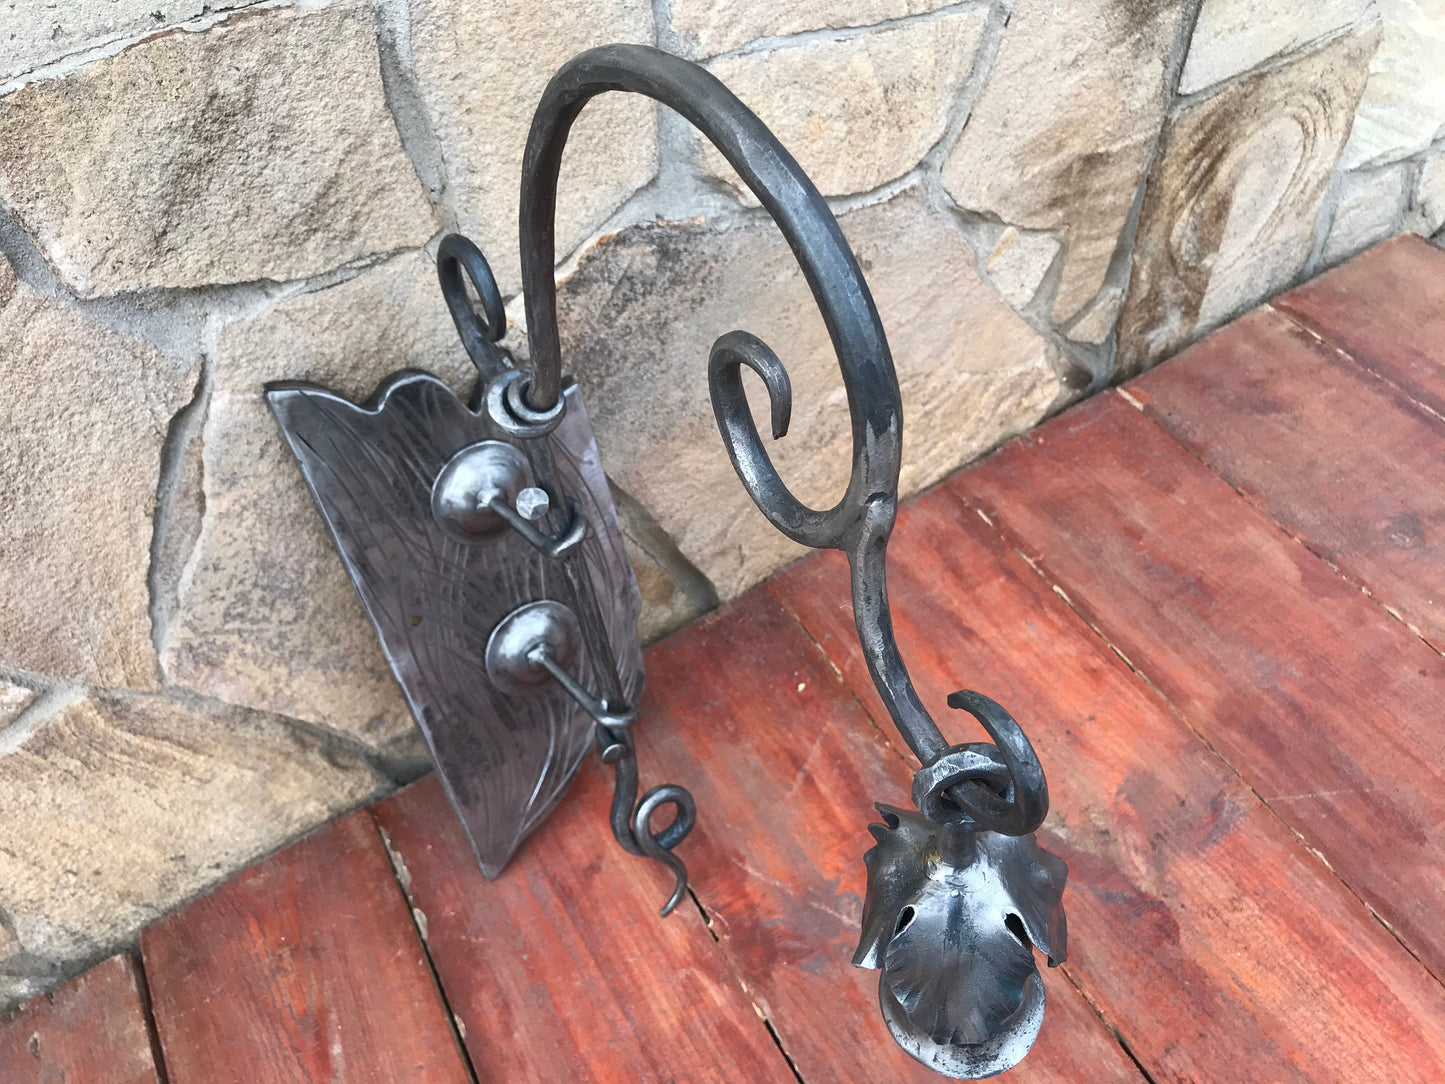 Iron bell, 6th anniversary, iron gift, bell, Christmas bell, metal sculpture, Christmas gift,porch decor,iron anniversary,door bell,birthday